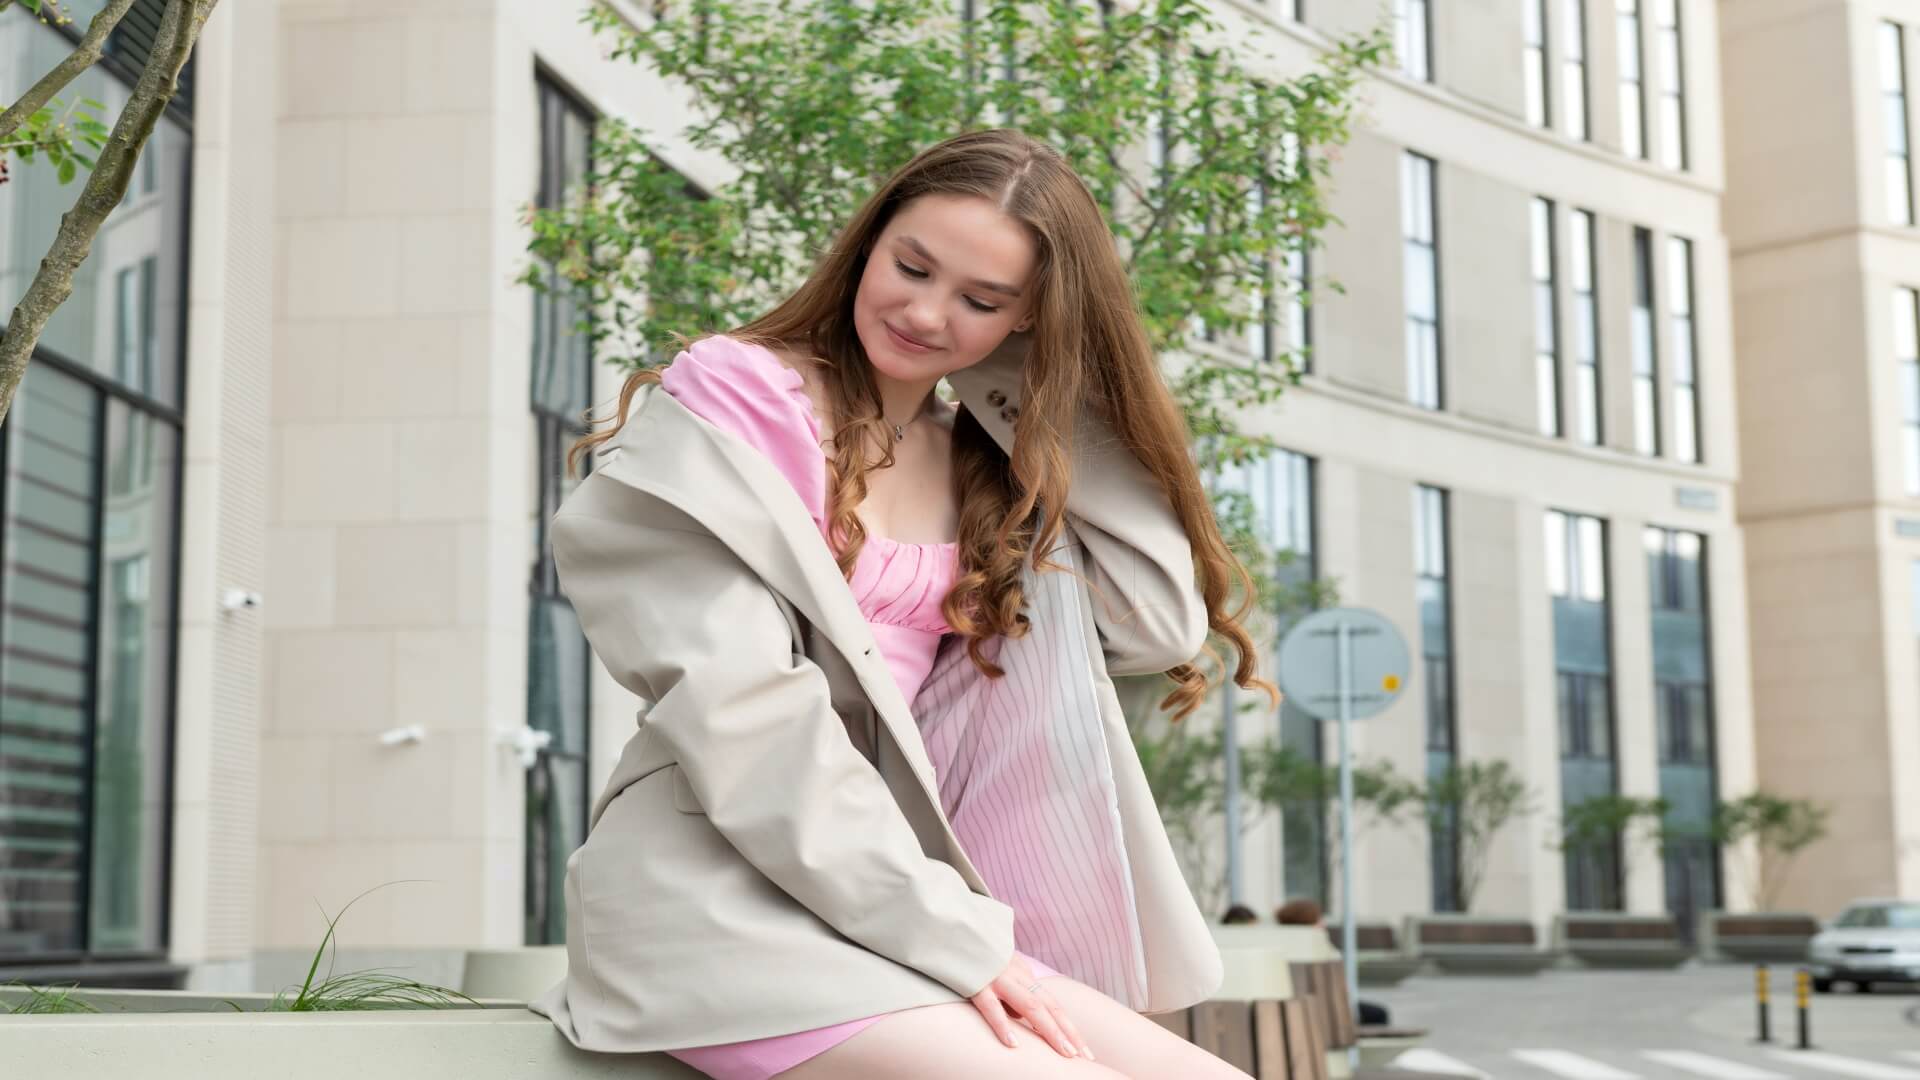 Waterproof,Lightweight,Business Casual Mini Metal Heart Decor Baguette Bag  pink For Teen Girls Women College Students,Rookies & White-collar Workers